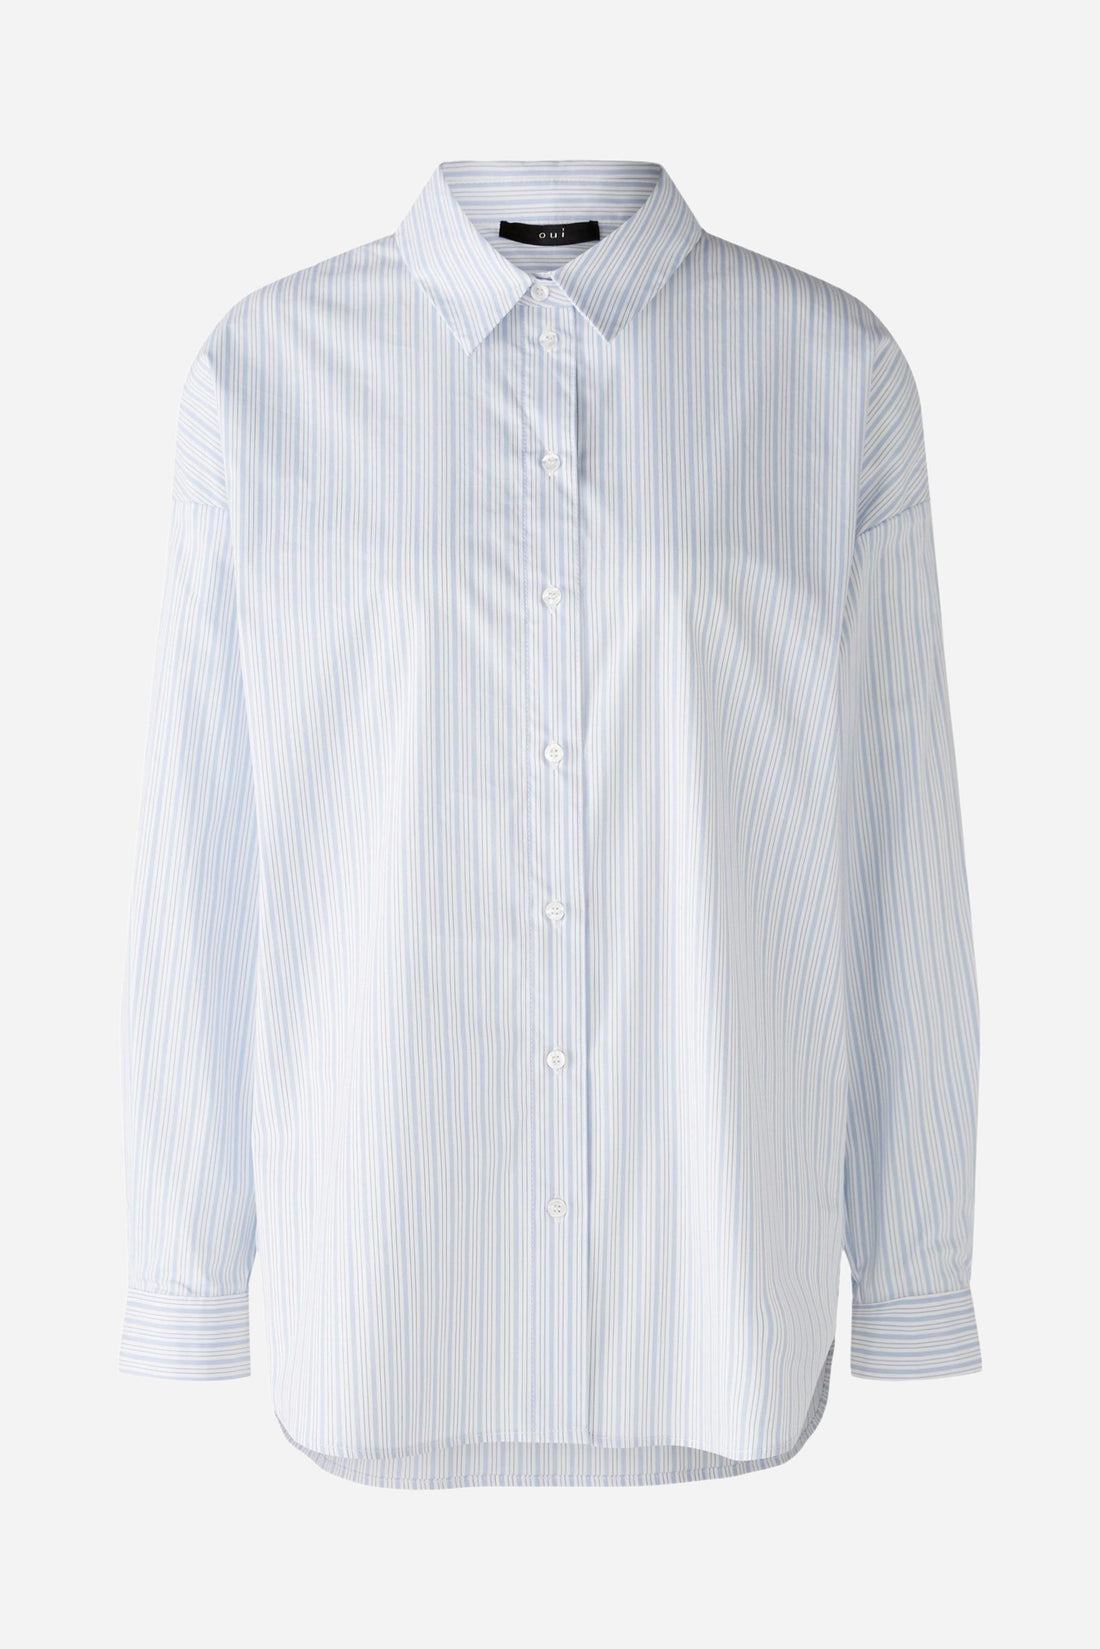 Shirt Blouse Cotton Blend_86776_0521_01